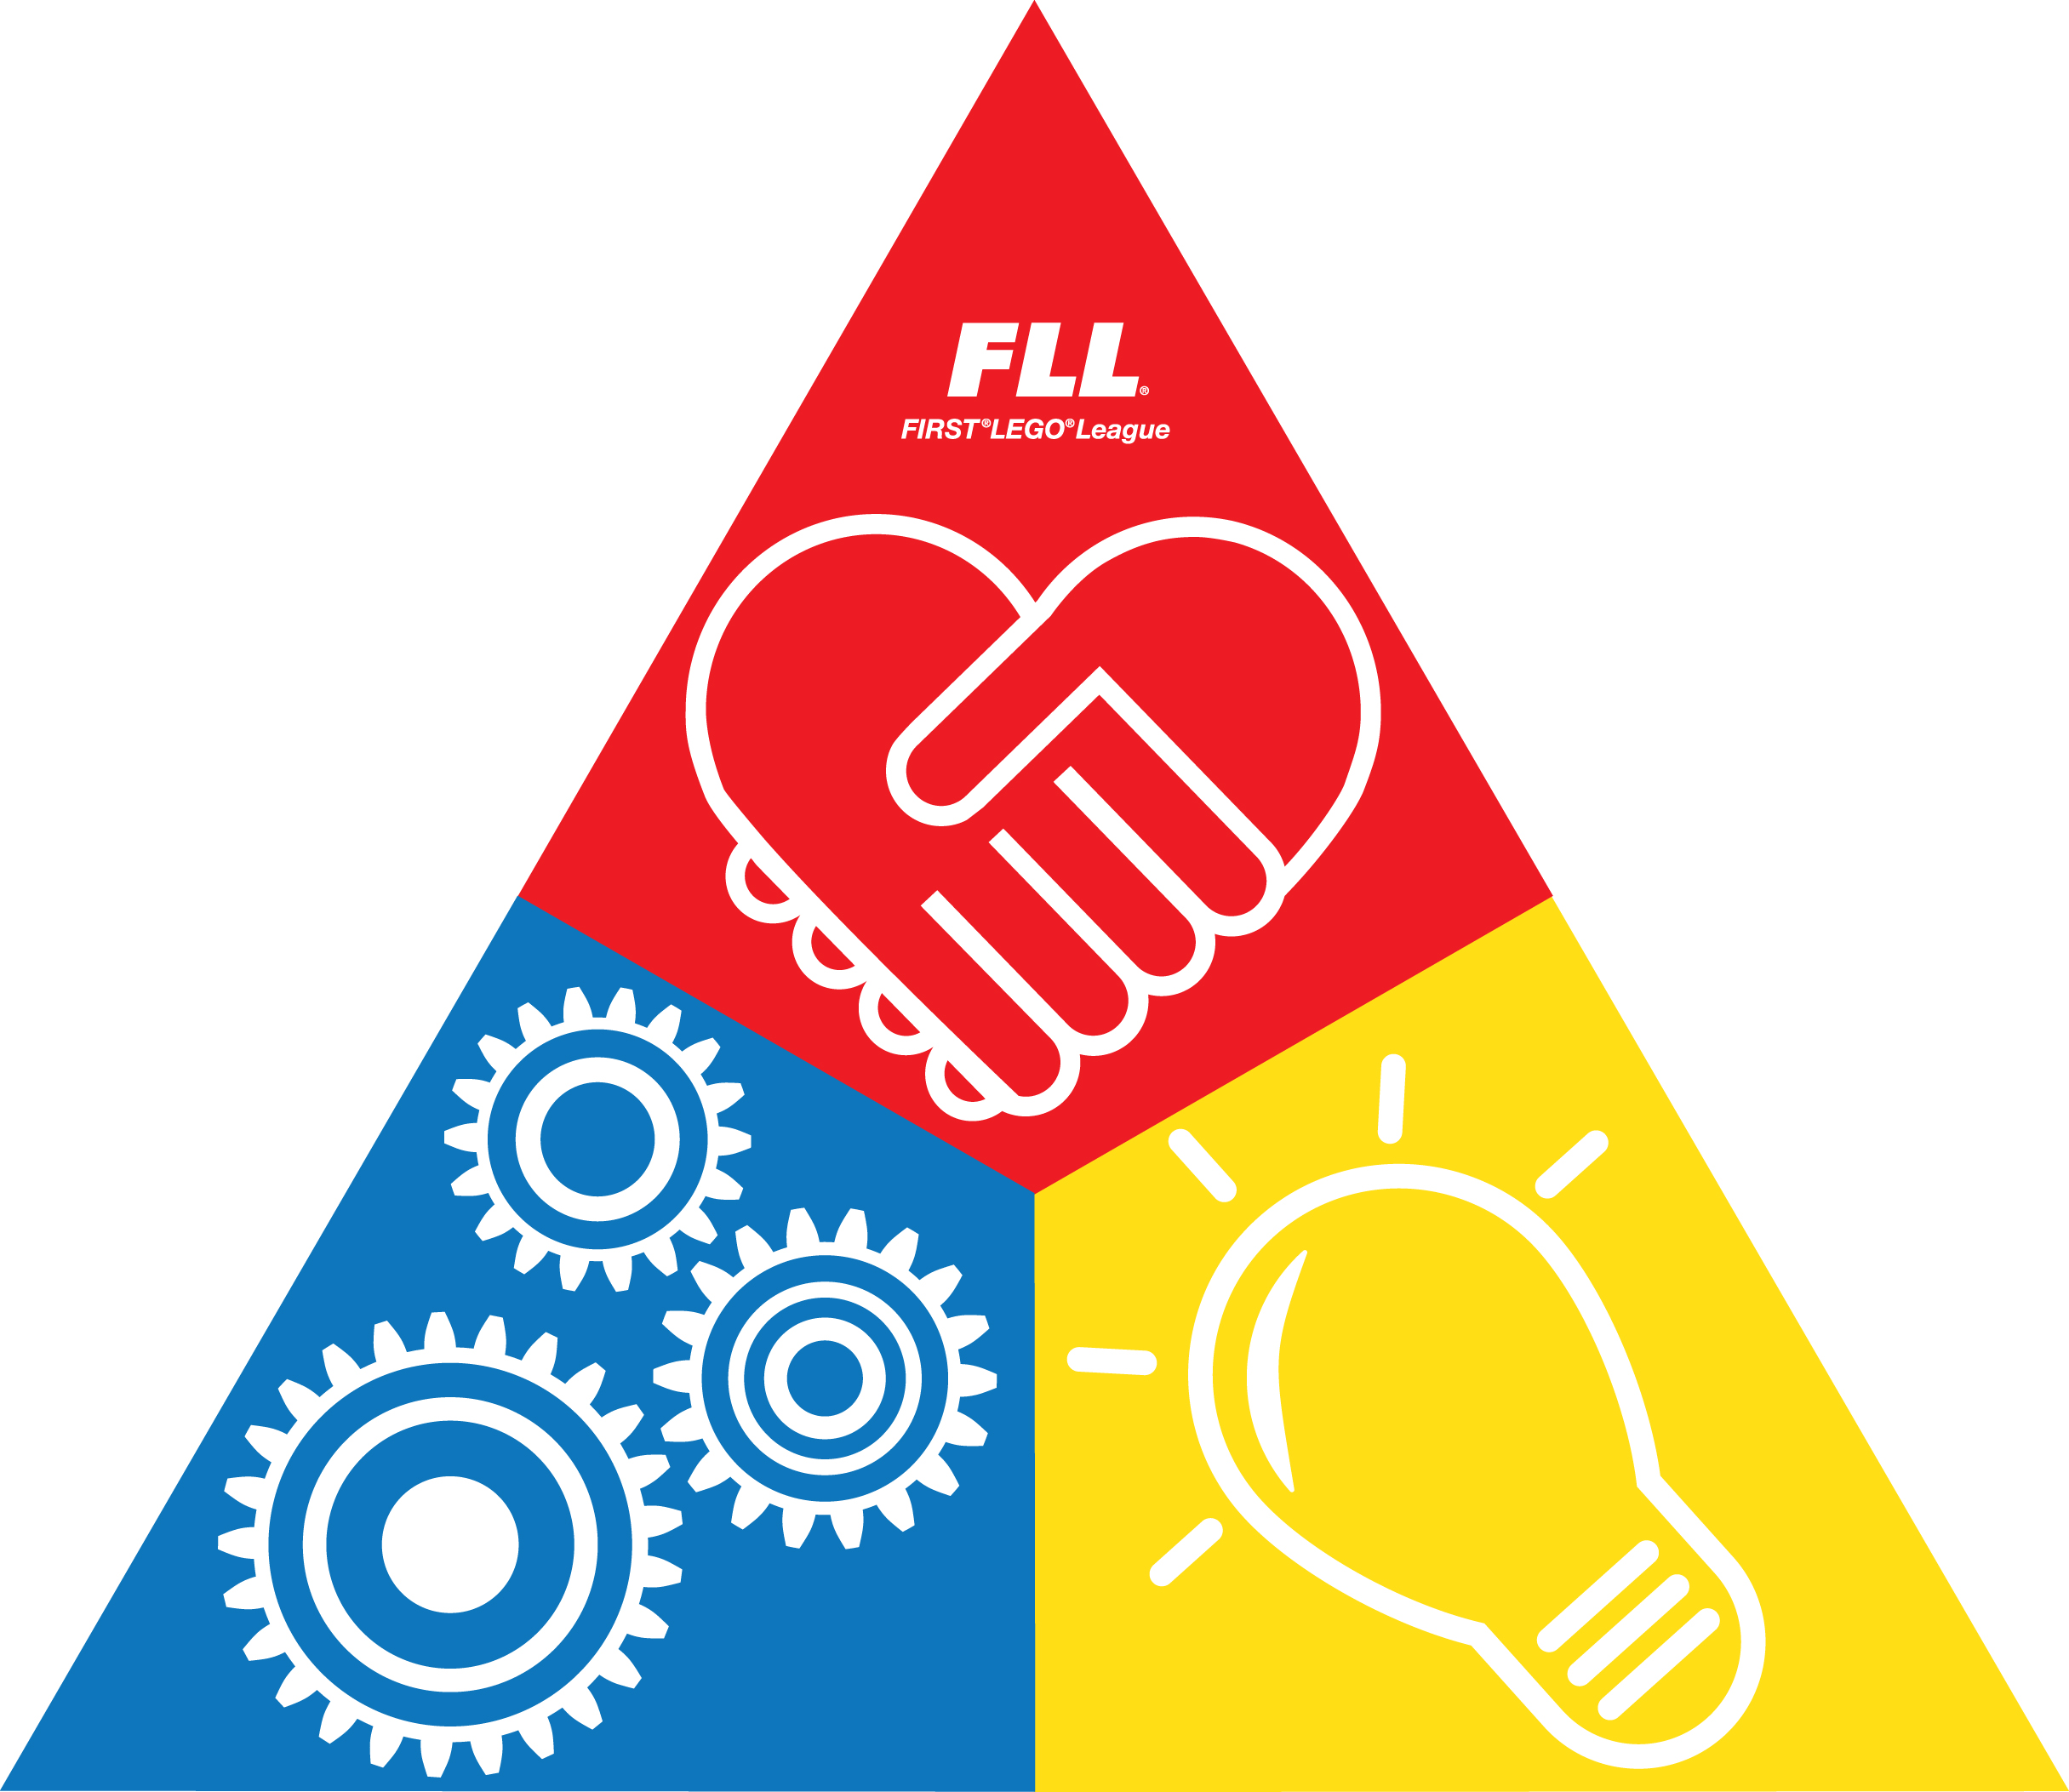 FLL full triangle